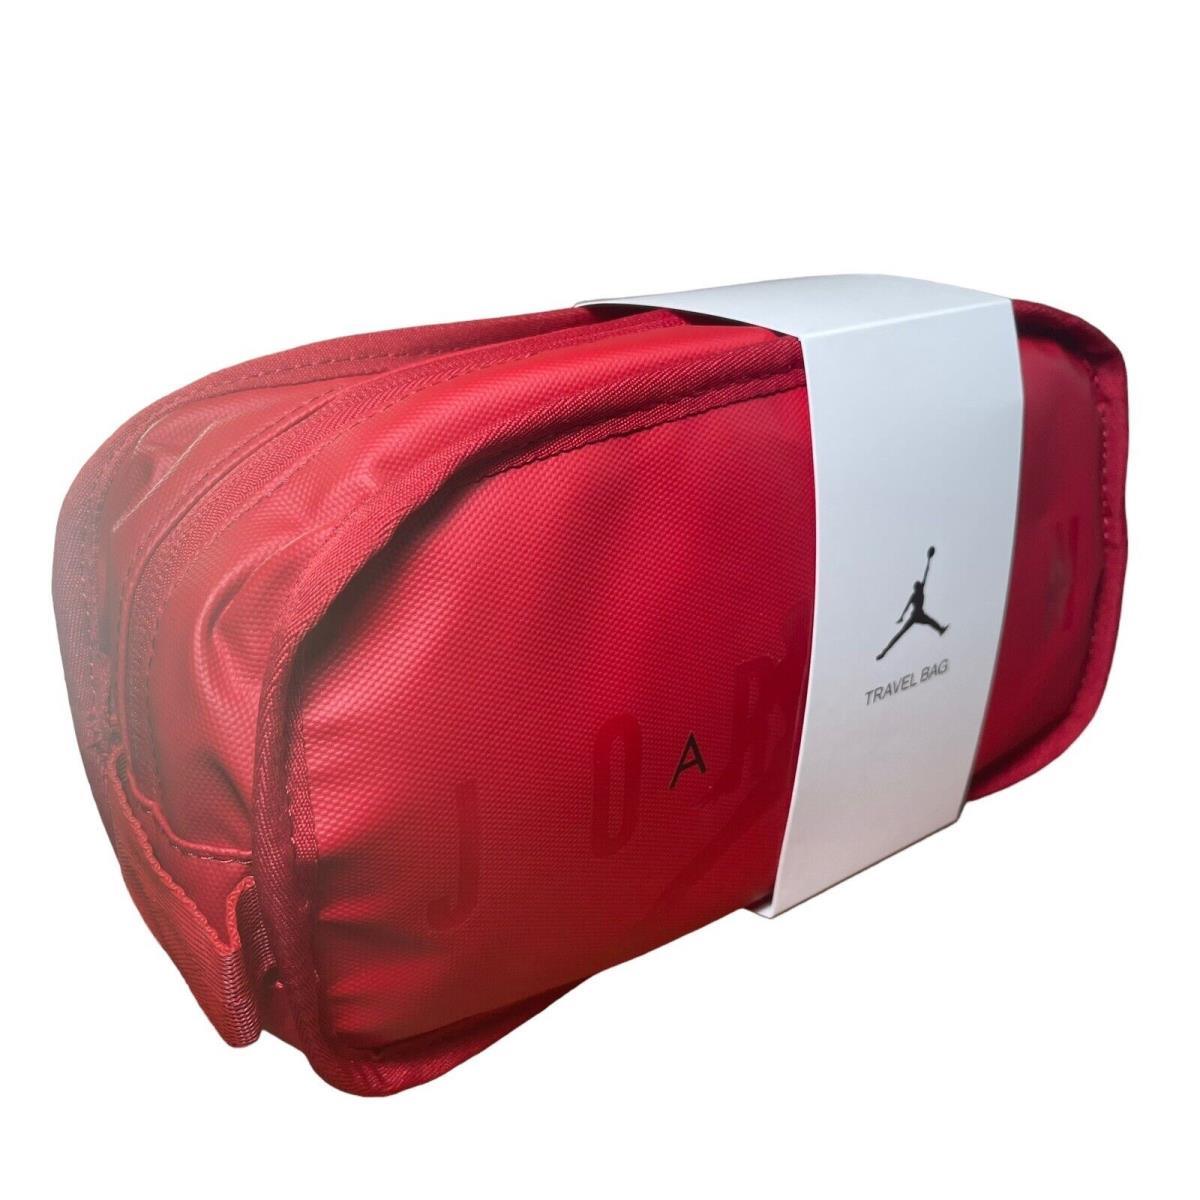 Nike Air Jordan Travel Dopp Kit Clutch Bag Toiletries Bag. Gym Red